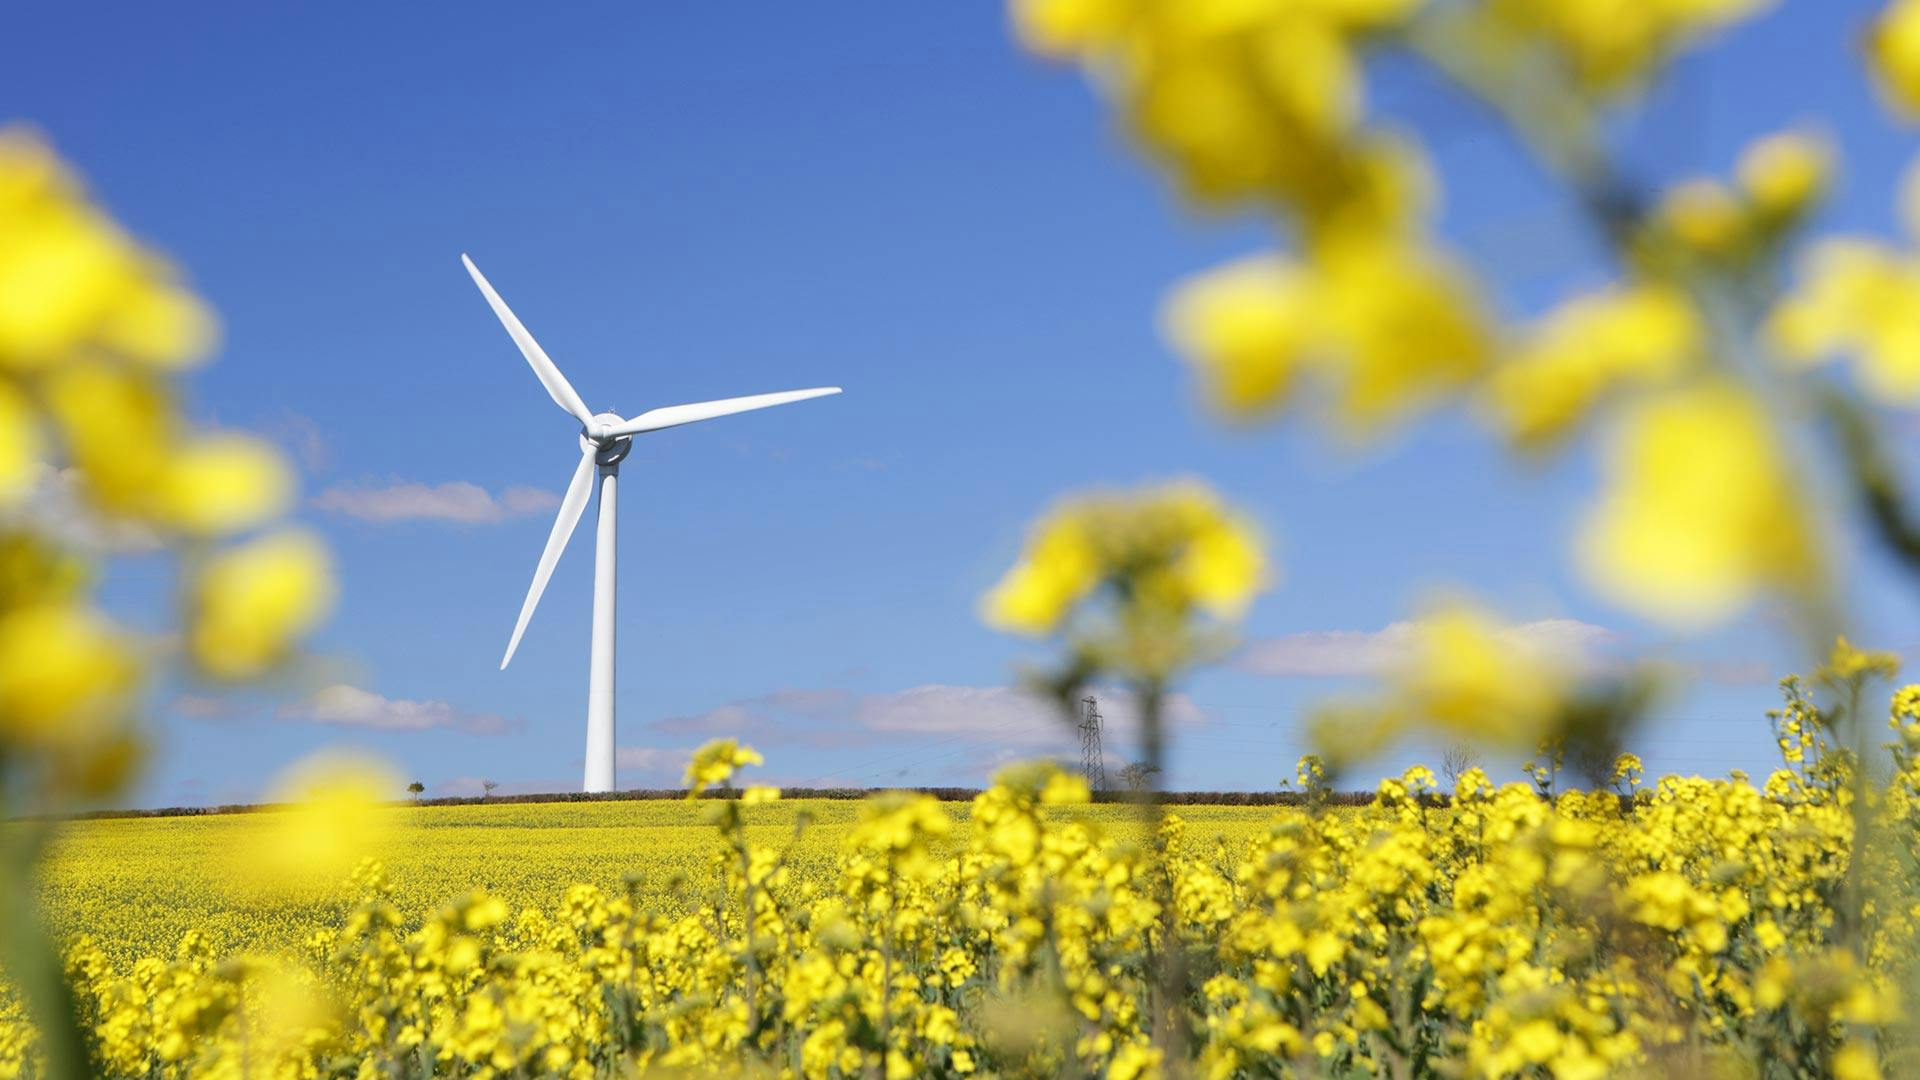 Windmill in a field of yellow flowers
